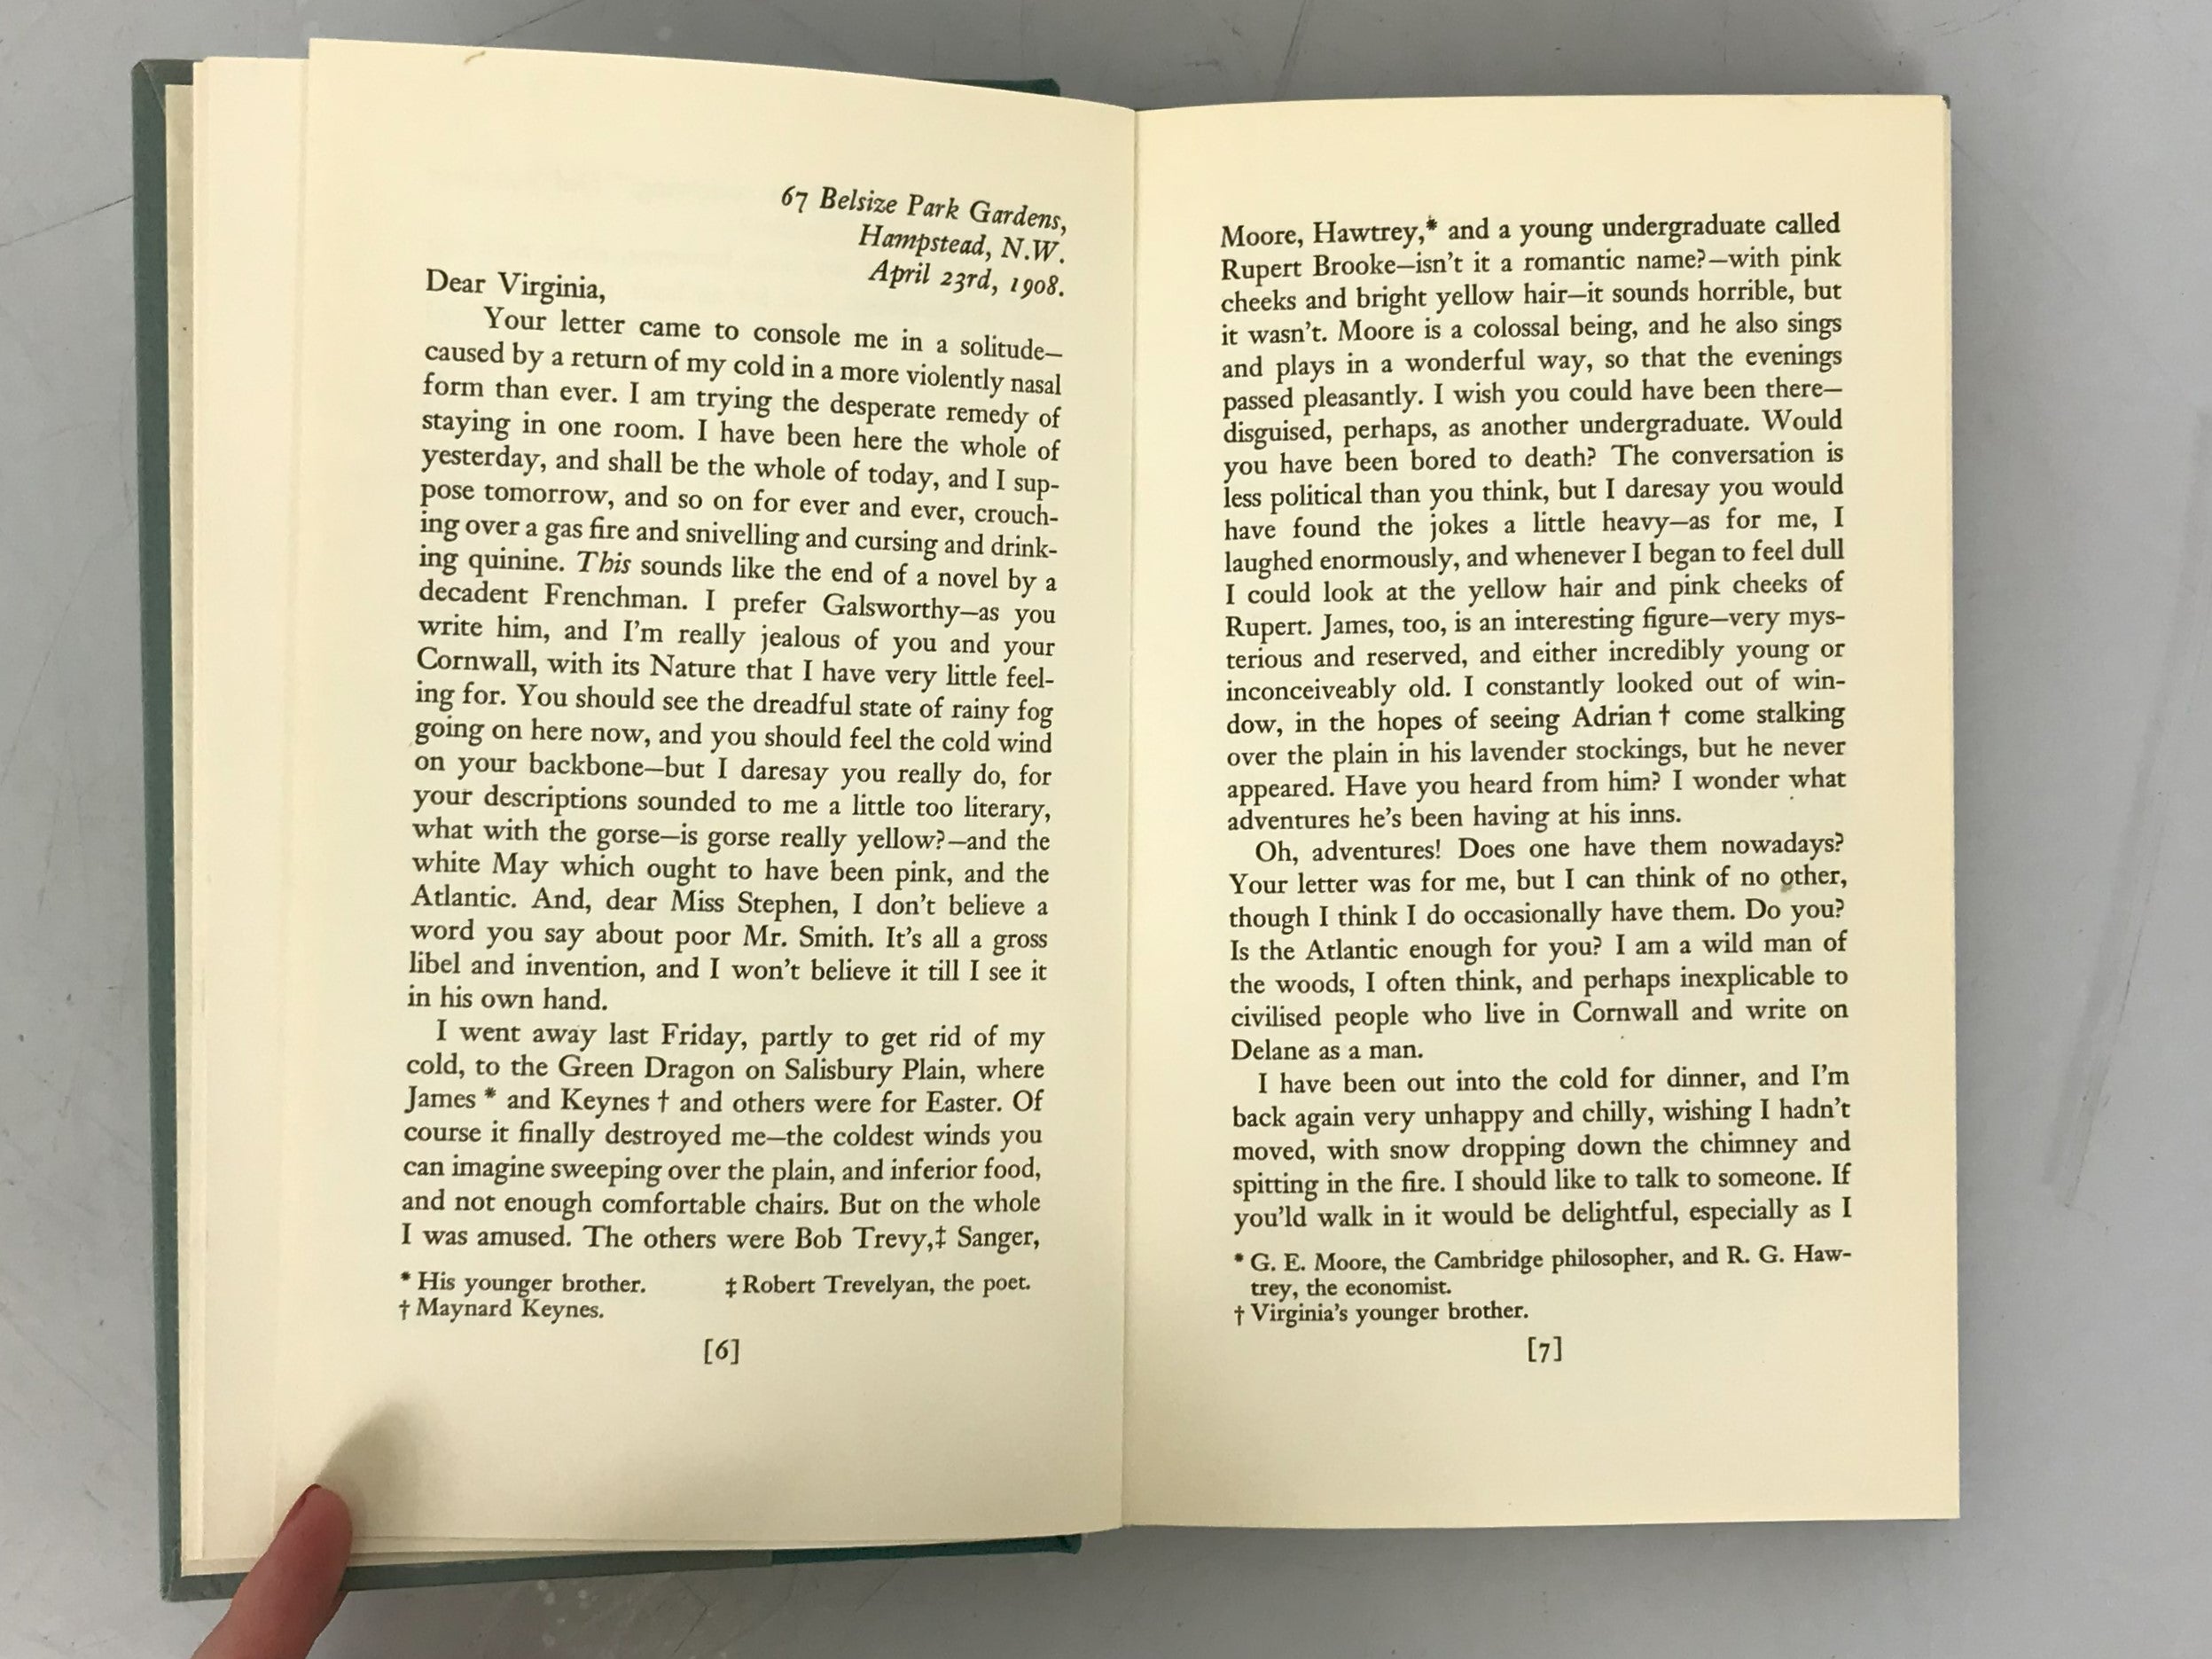 Lytton Strachey Letters by Virginia Woolf First American Edition 1956 HC DJ